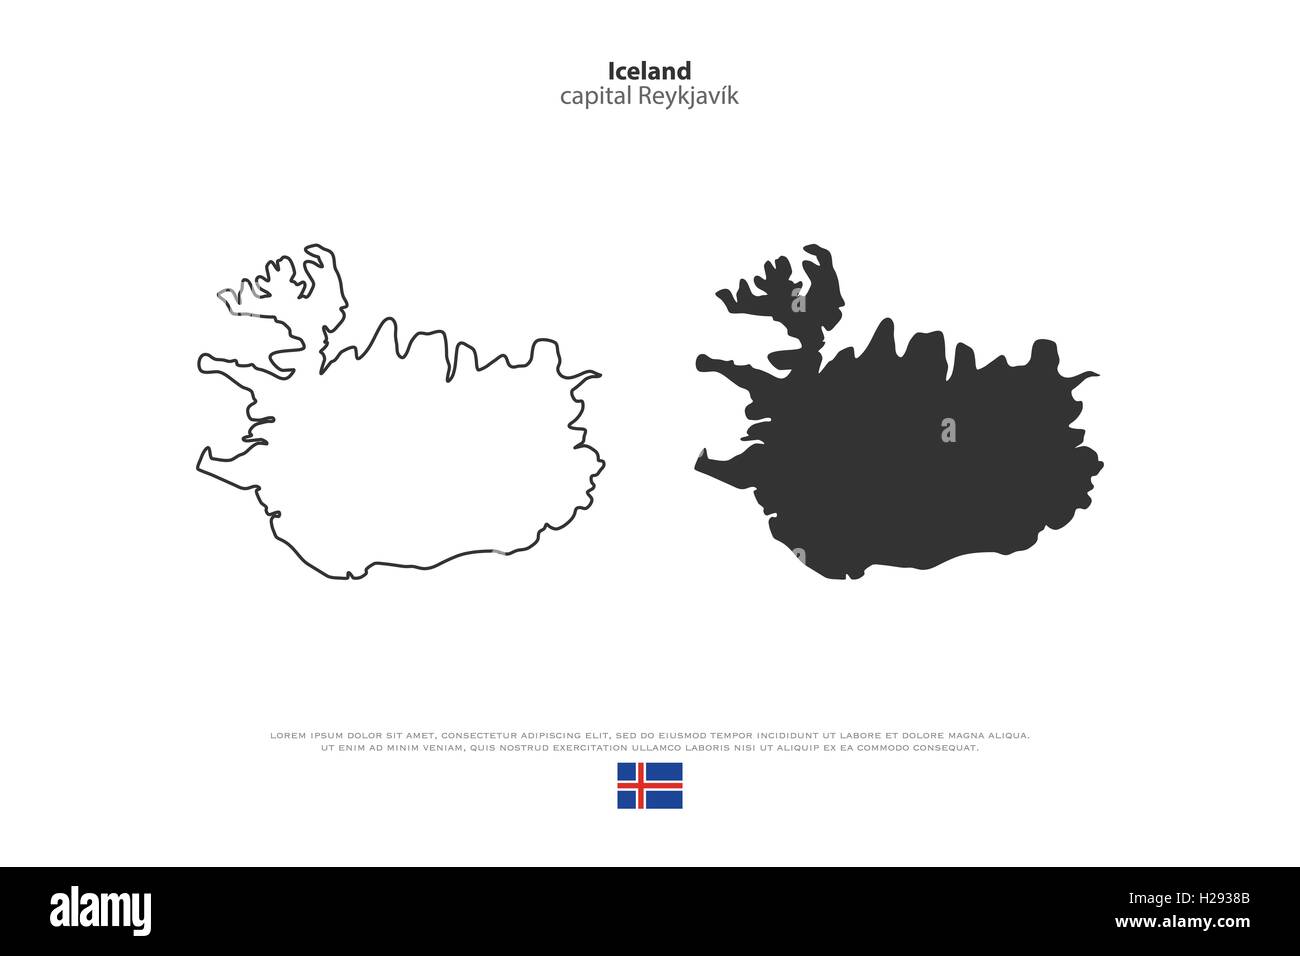 Republik Island isoliert Karte und offizielle Flaggen-Icons. Vektor-Island-politische Karten-Symbol. Nordic Inselstaat geographische b Stock Vektor